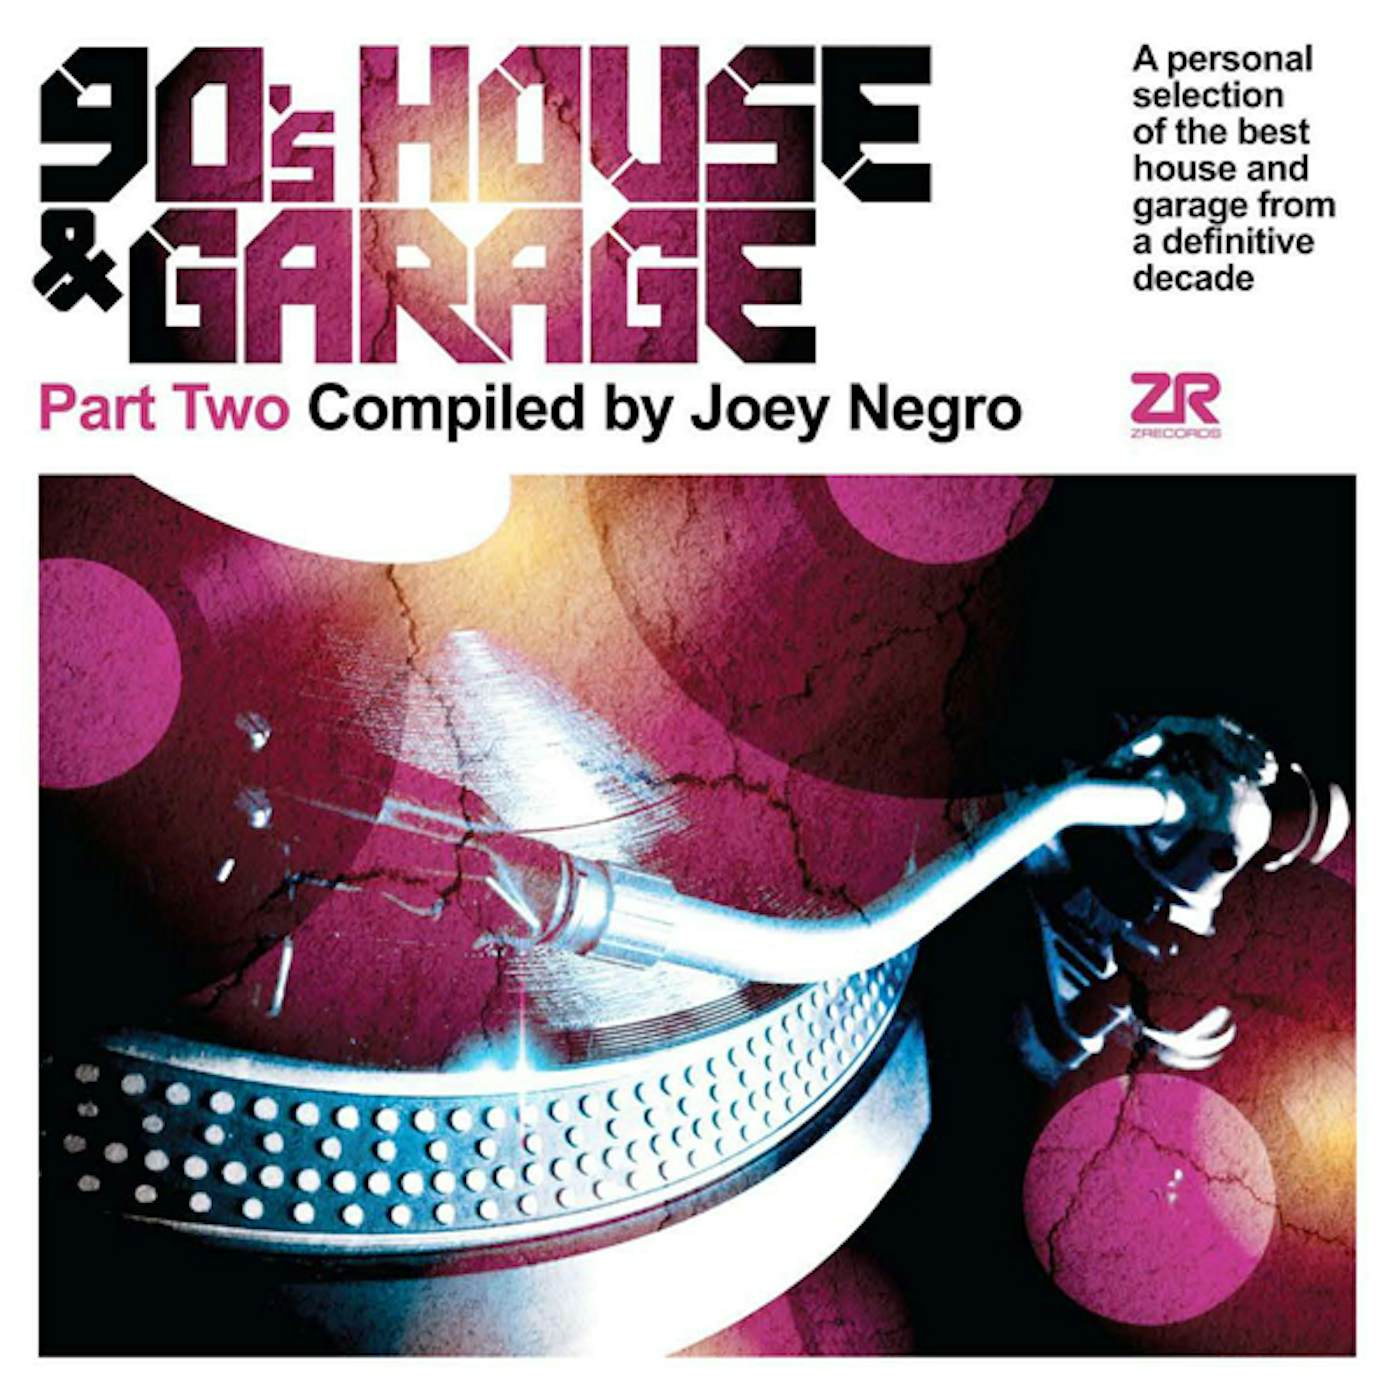 Joey Negro 90'S HOUSE & GARAGE PART TWO Vinyl Record